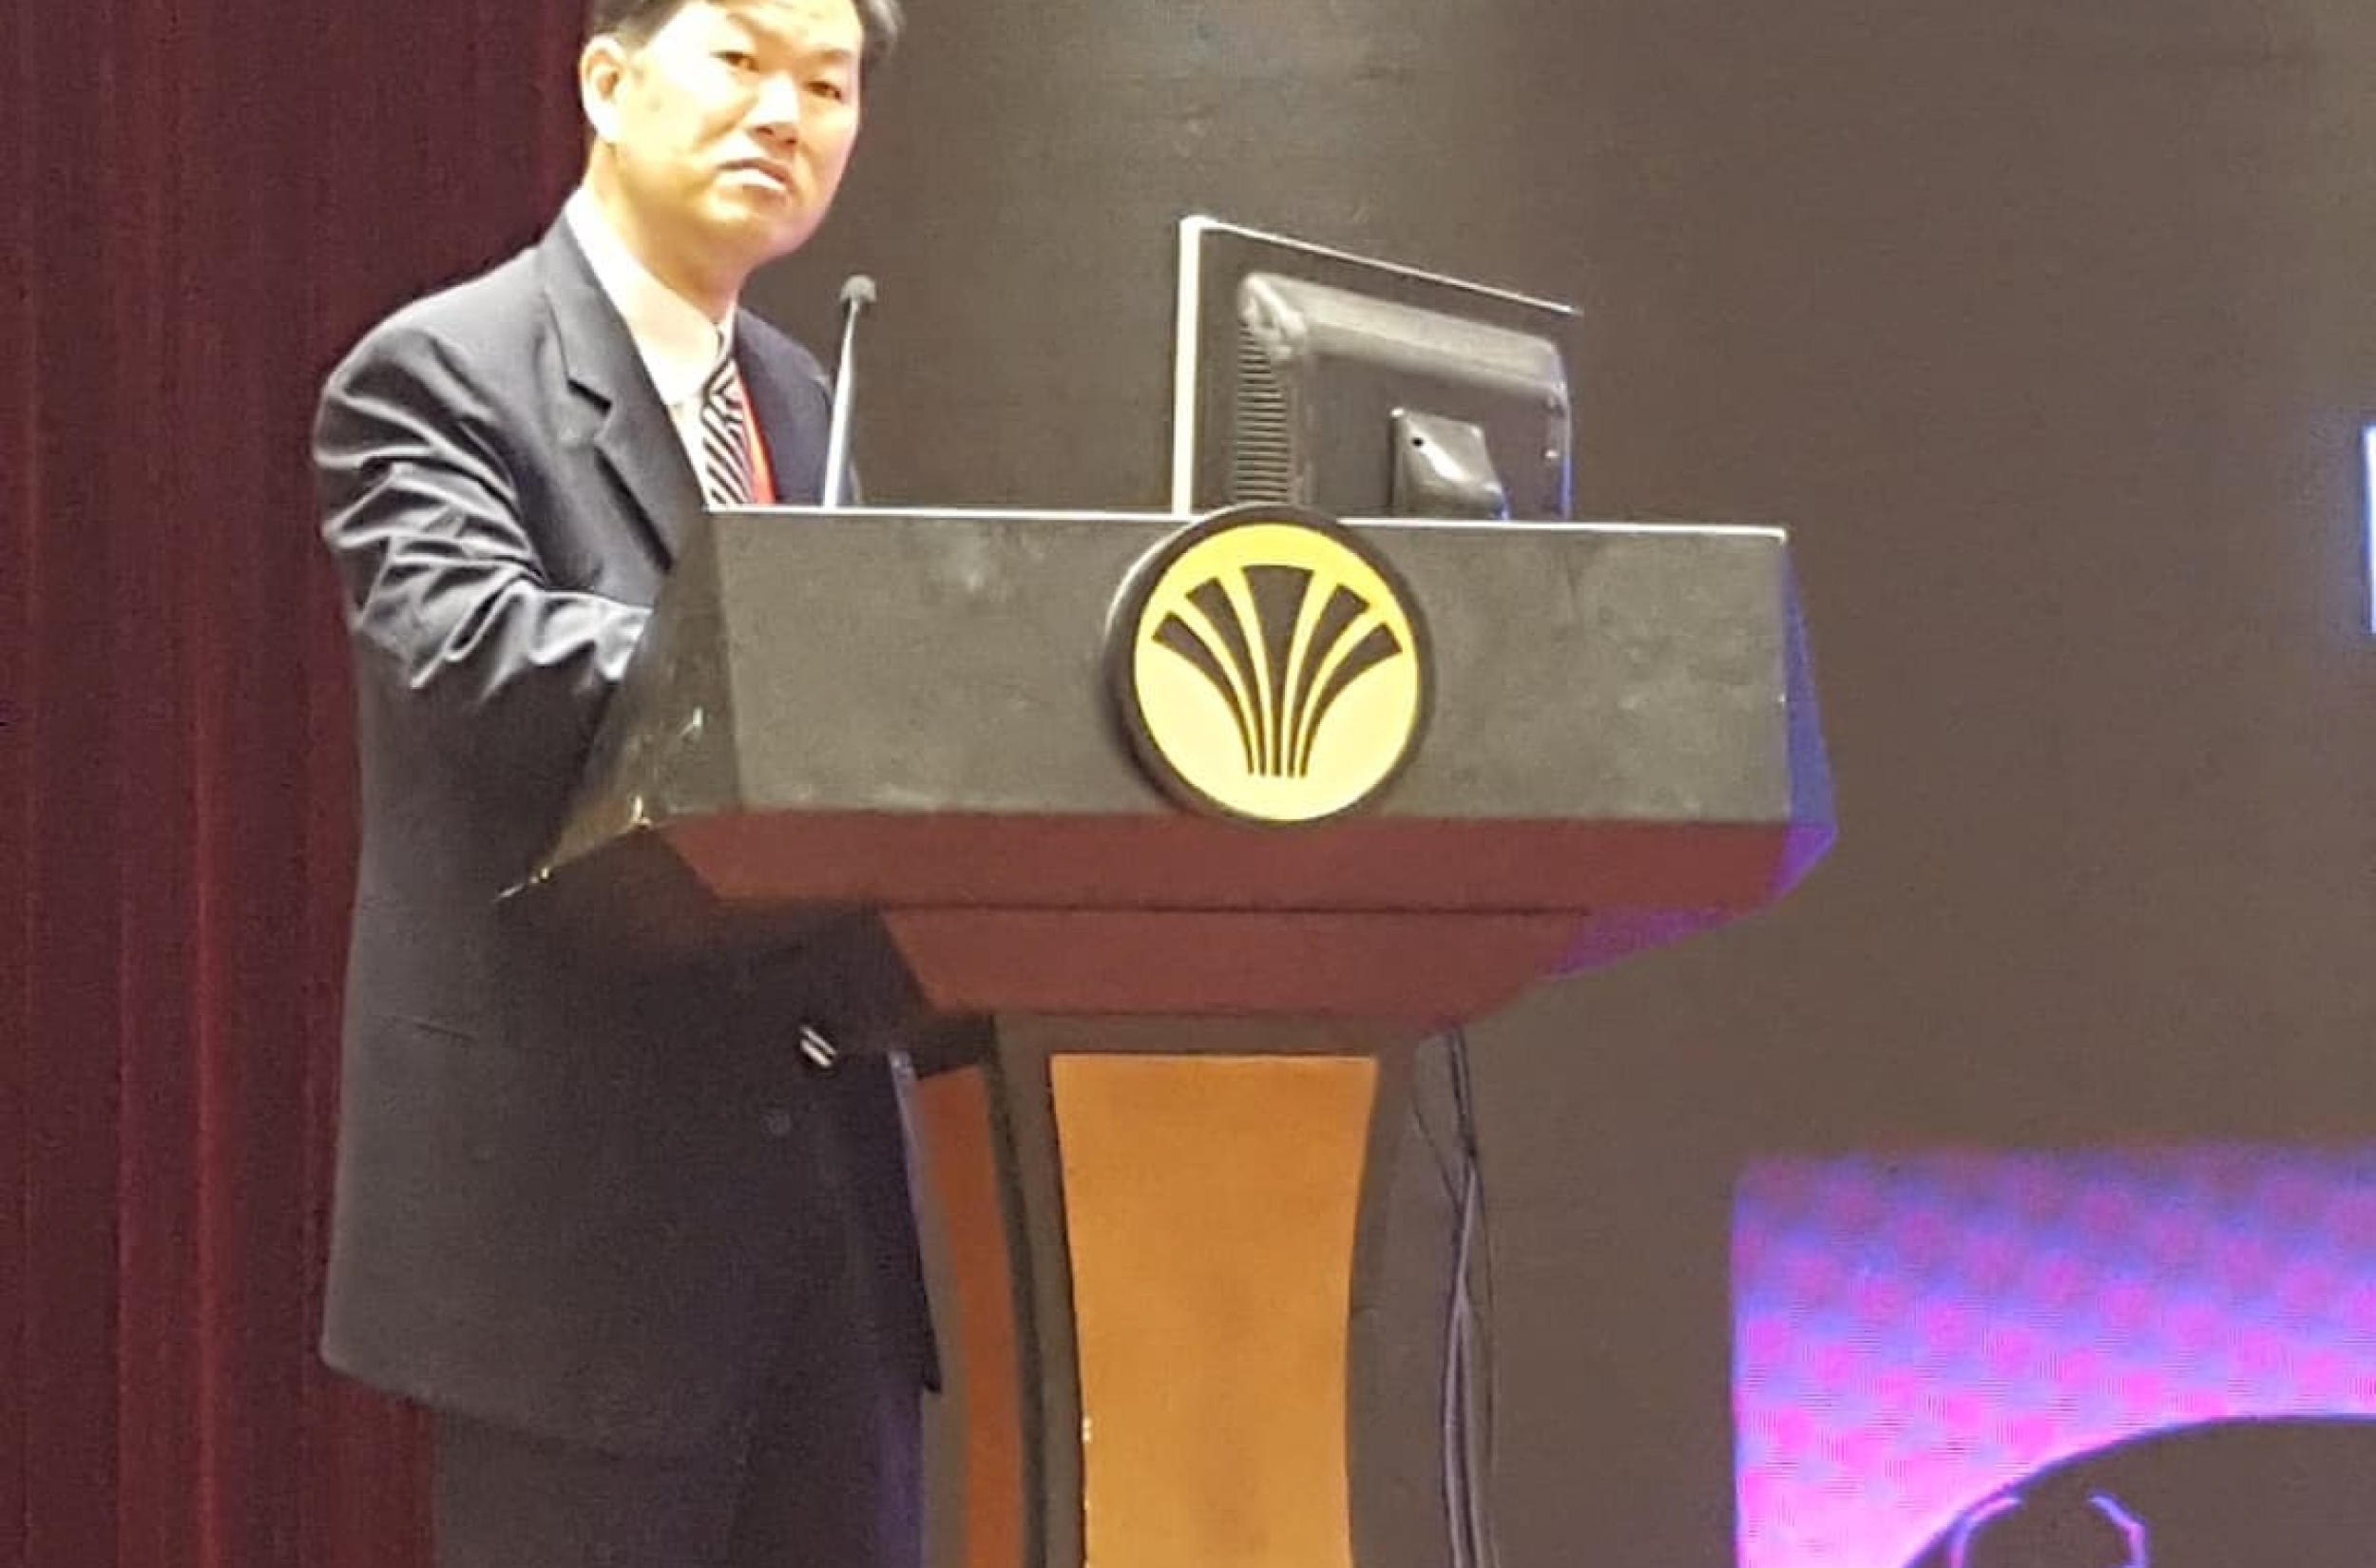 Dr. Kung speaking at a podium